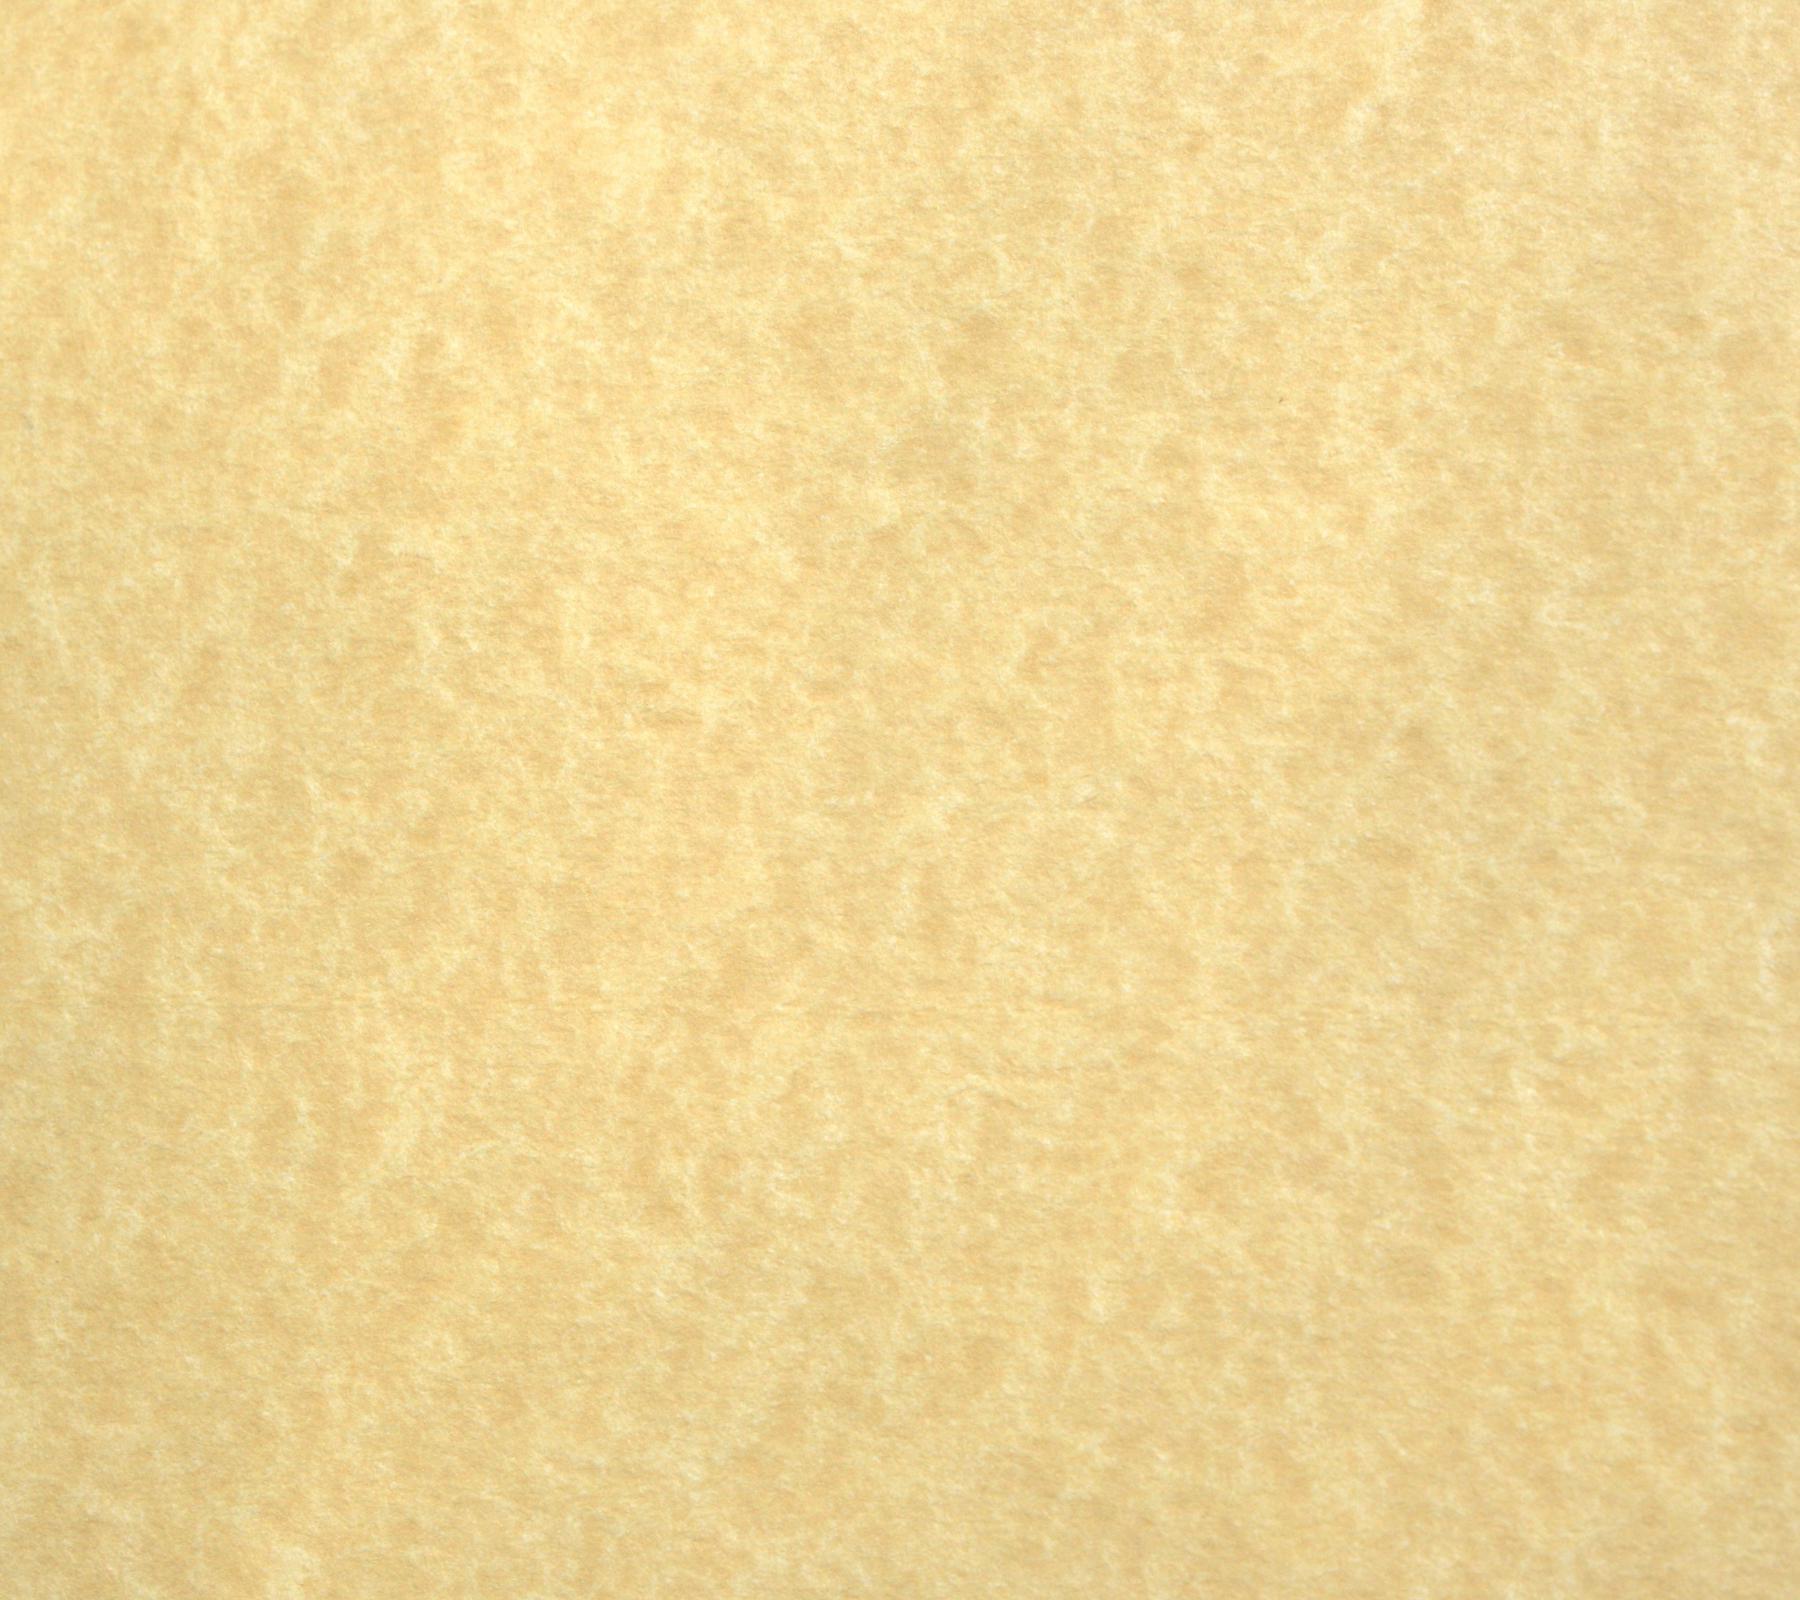 Parchment Paper Background Background